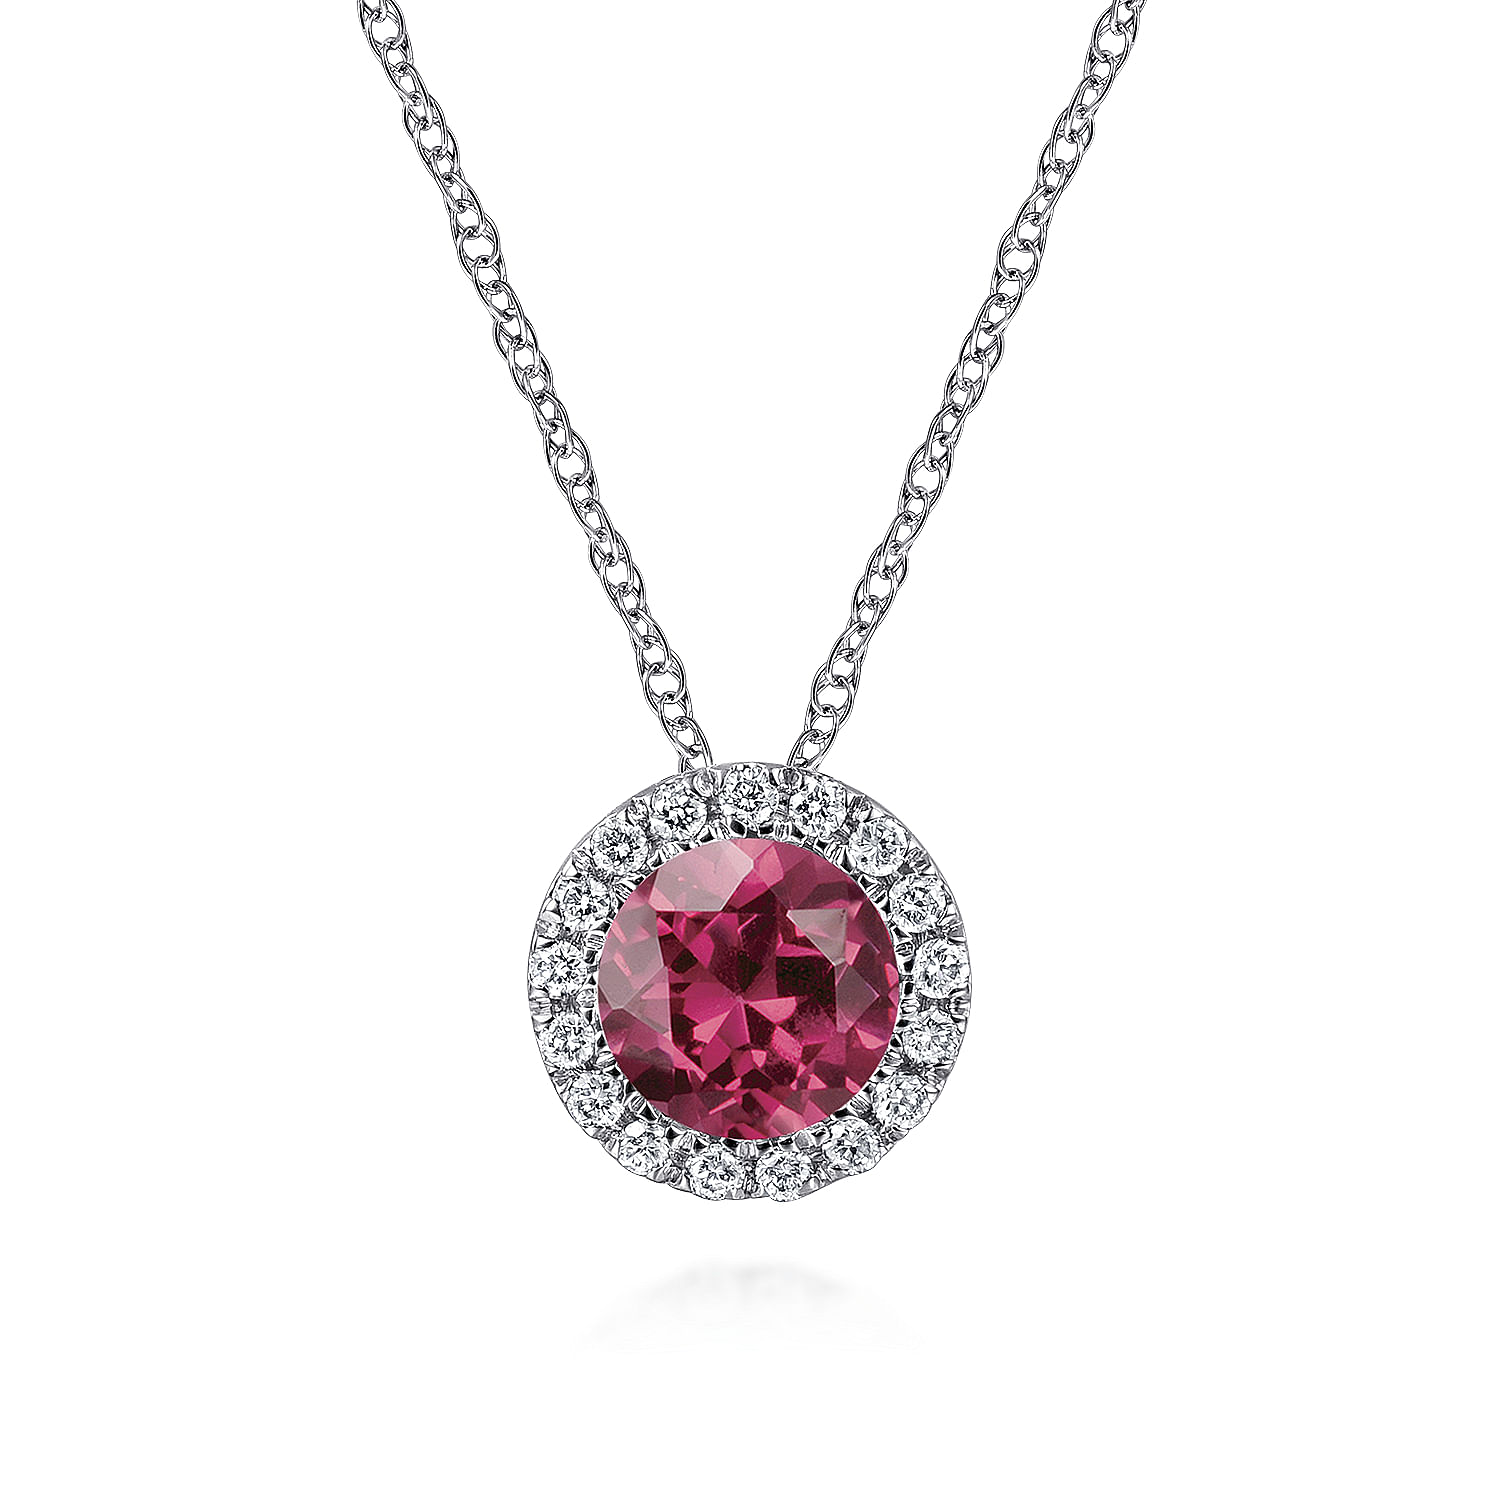 Gabriel - 14k White Gold Diamond Halo & Pink Tourmaline Pendant Necklace
